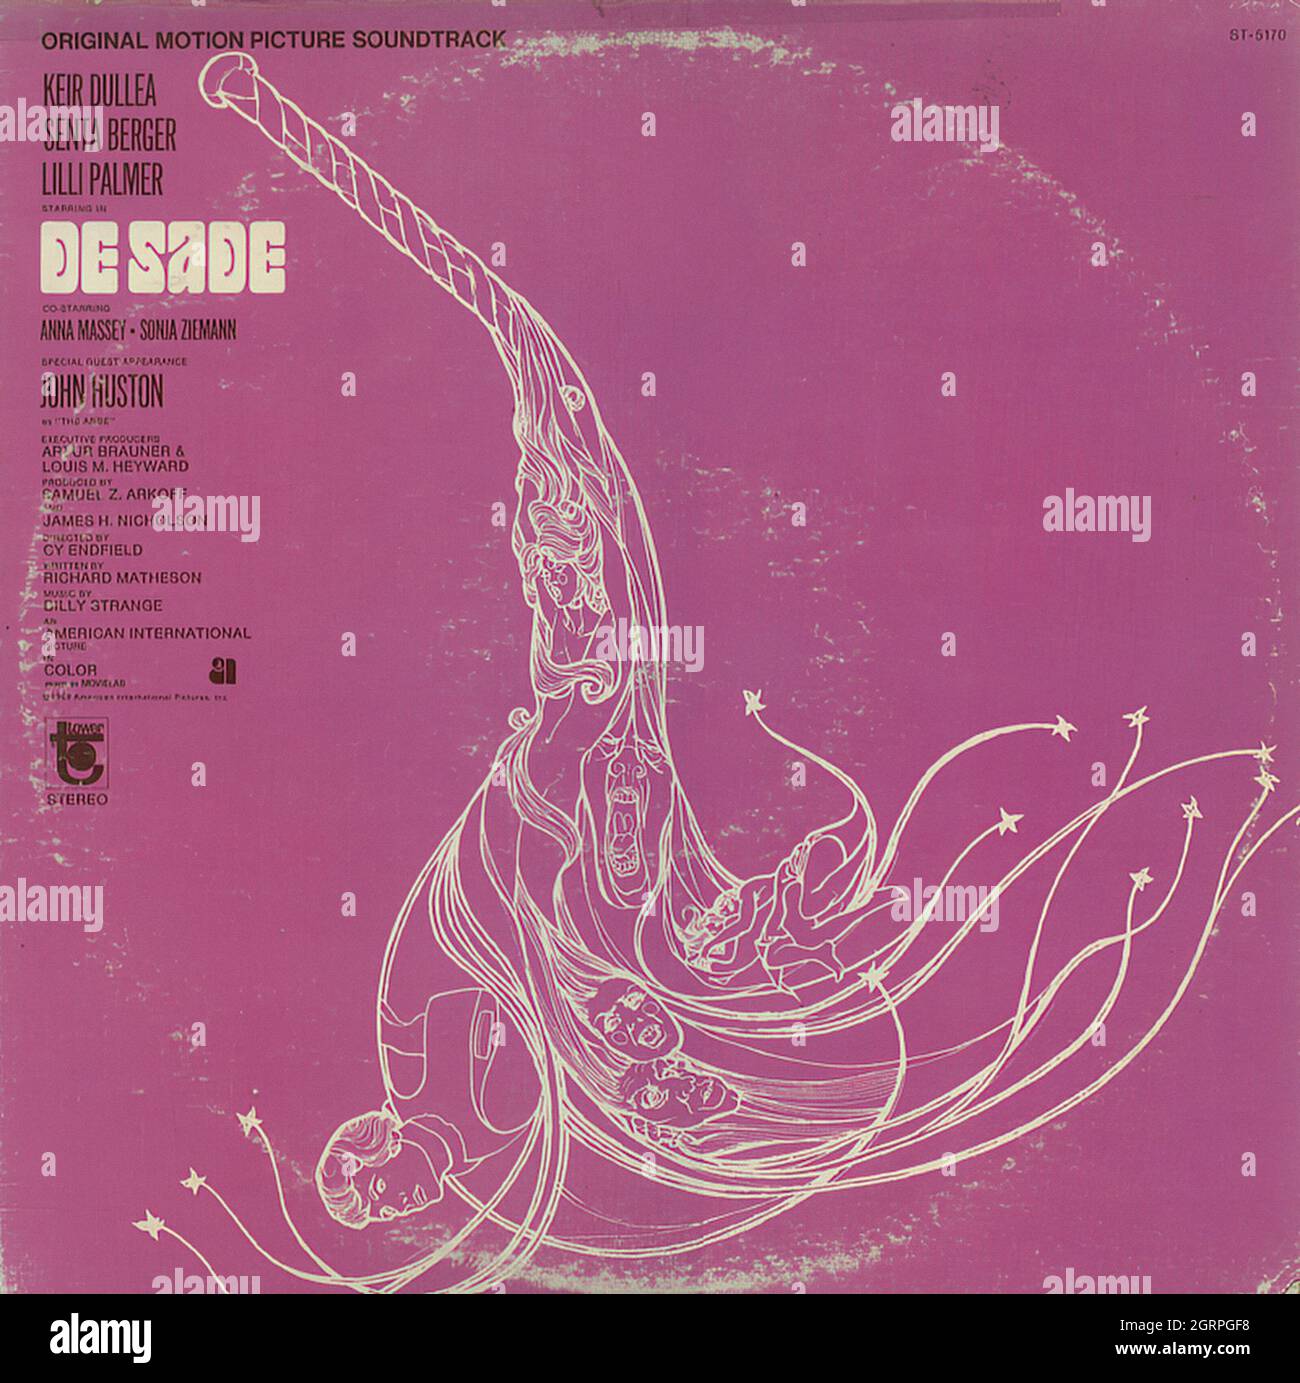 De Sade - Vintage Soundtrack Vinyl Album Stock Photo